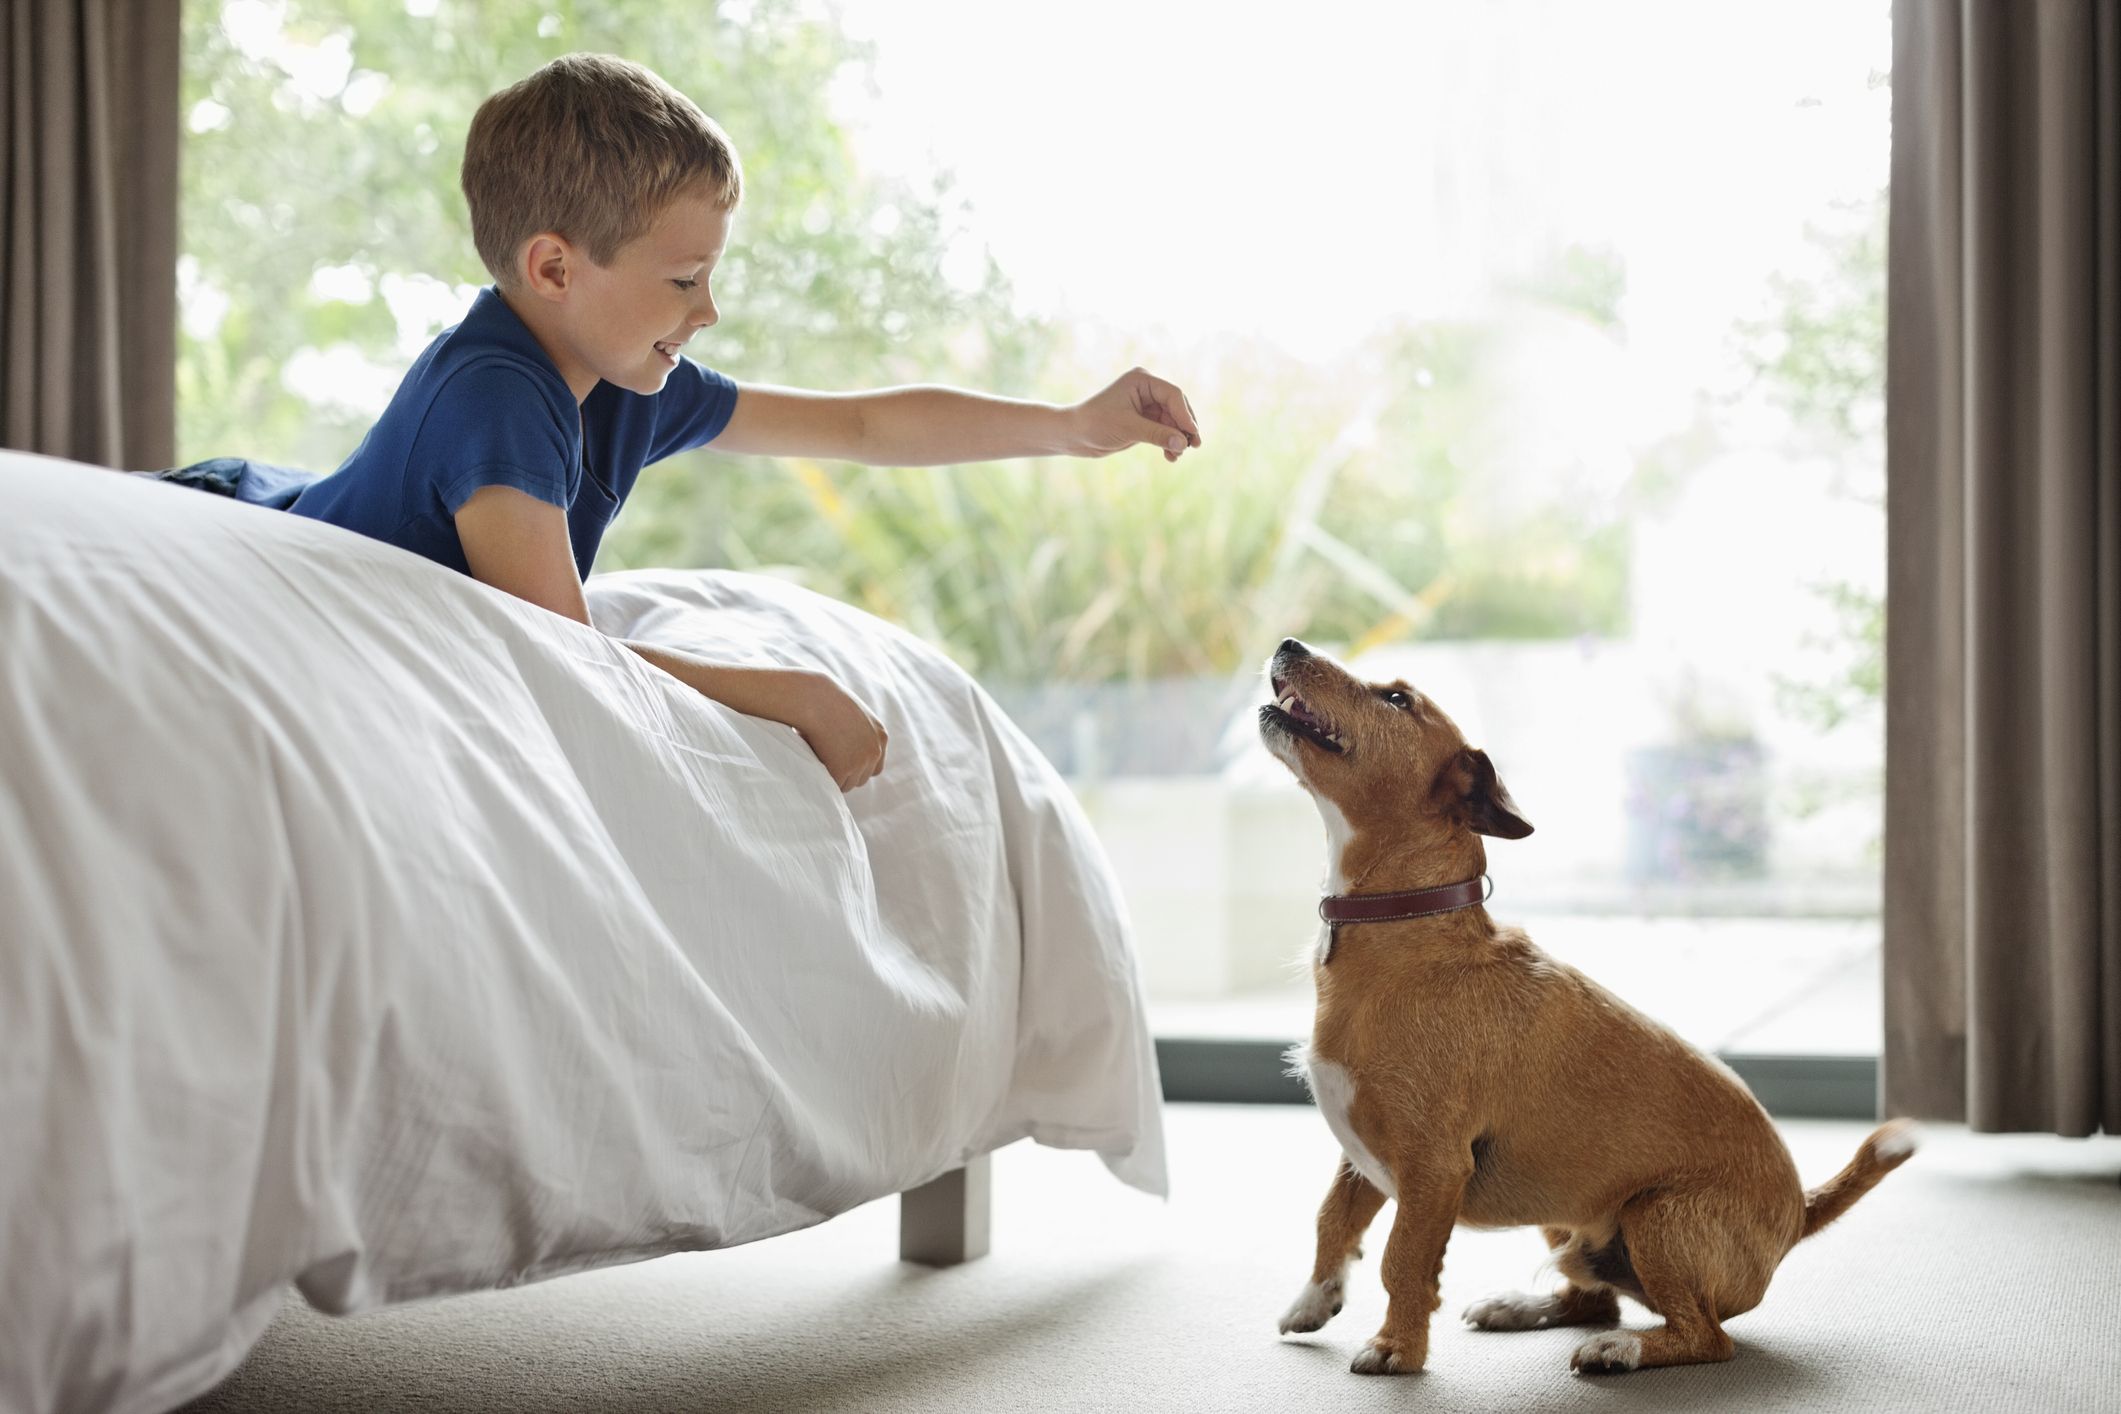 https://hips.hearstapps.com/hmg-prod/images/boy-giving-dog-treat-in-bedroom-royalty-free-image-166273042-1565864276.jpg